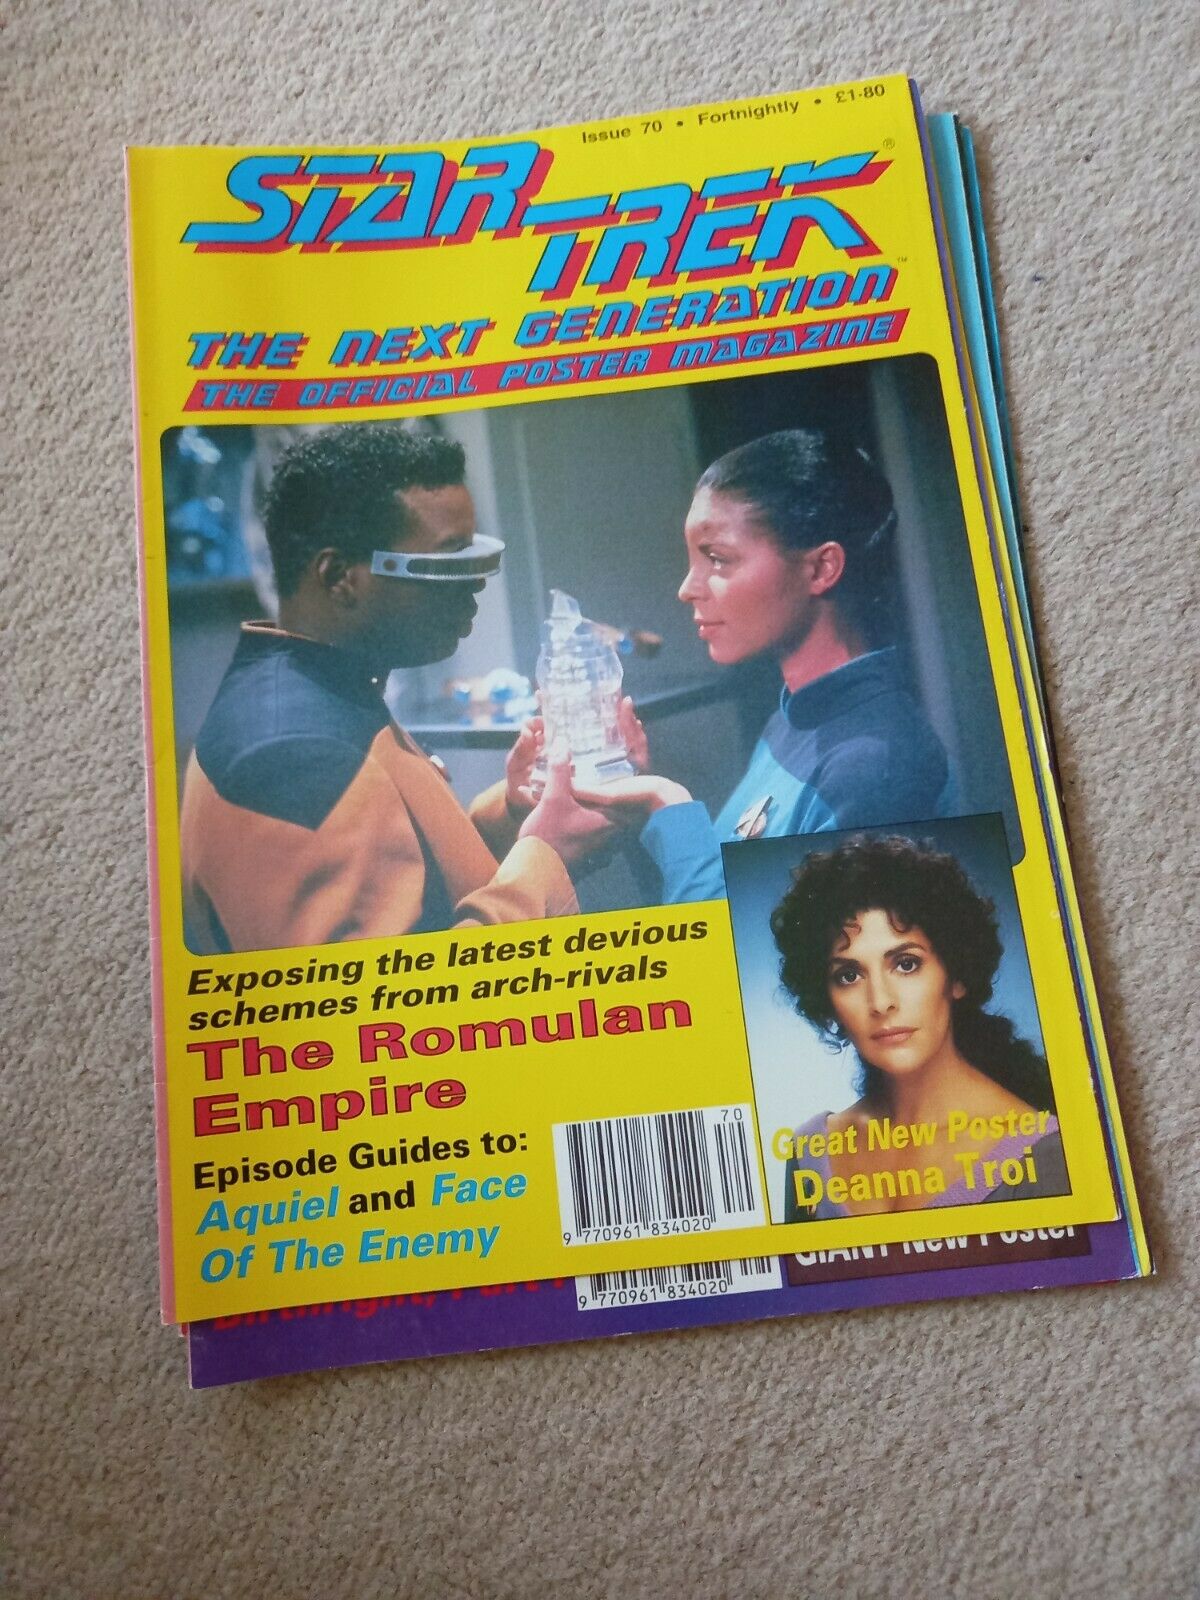 Star Trek: The Next Generation Poster Magazine #70